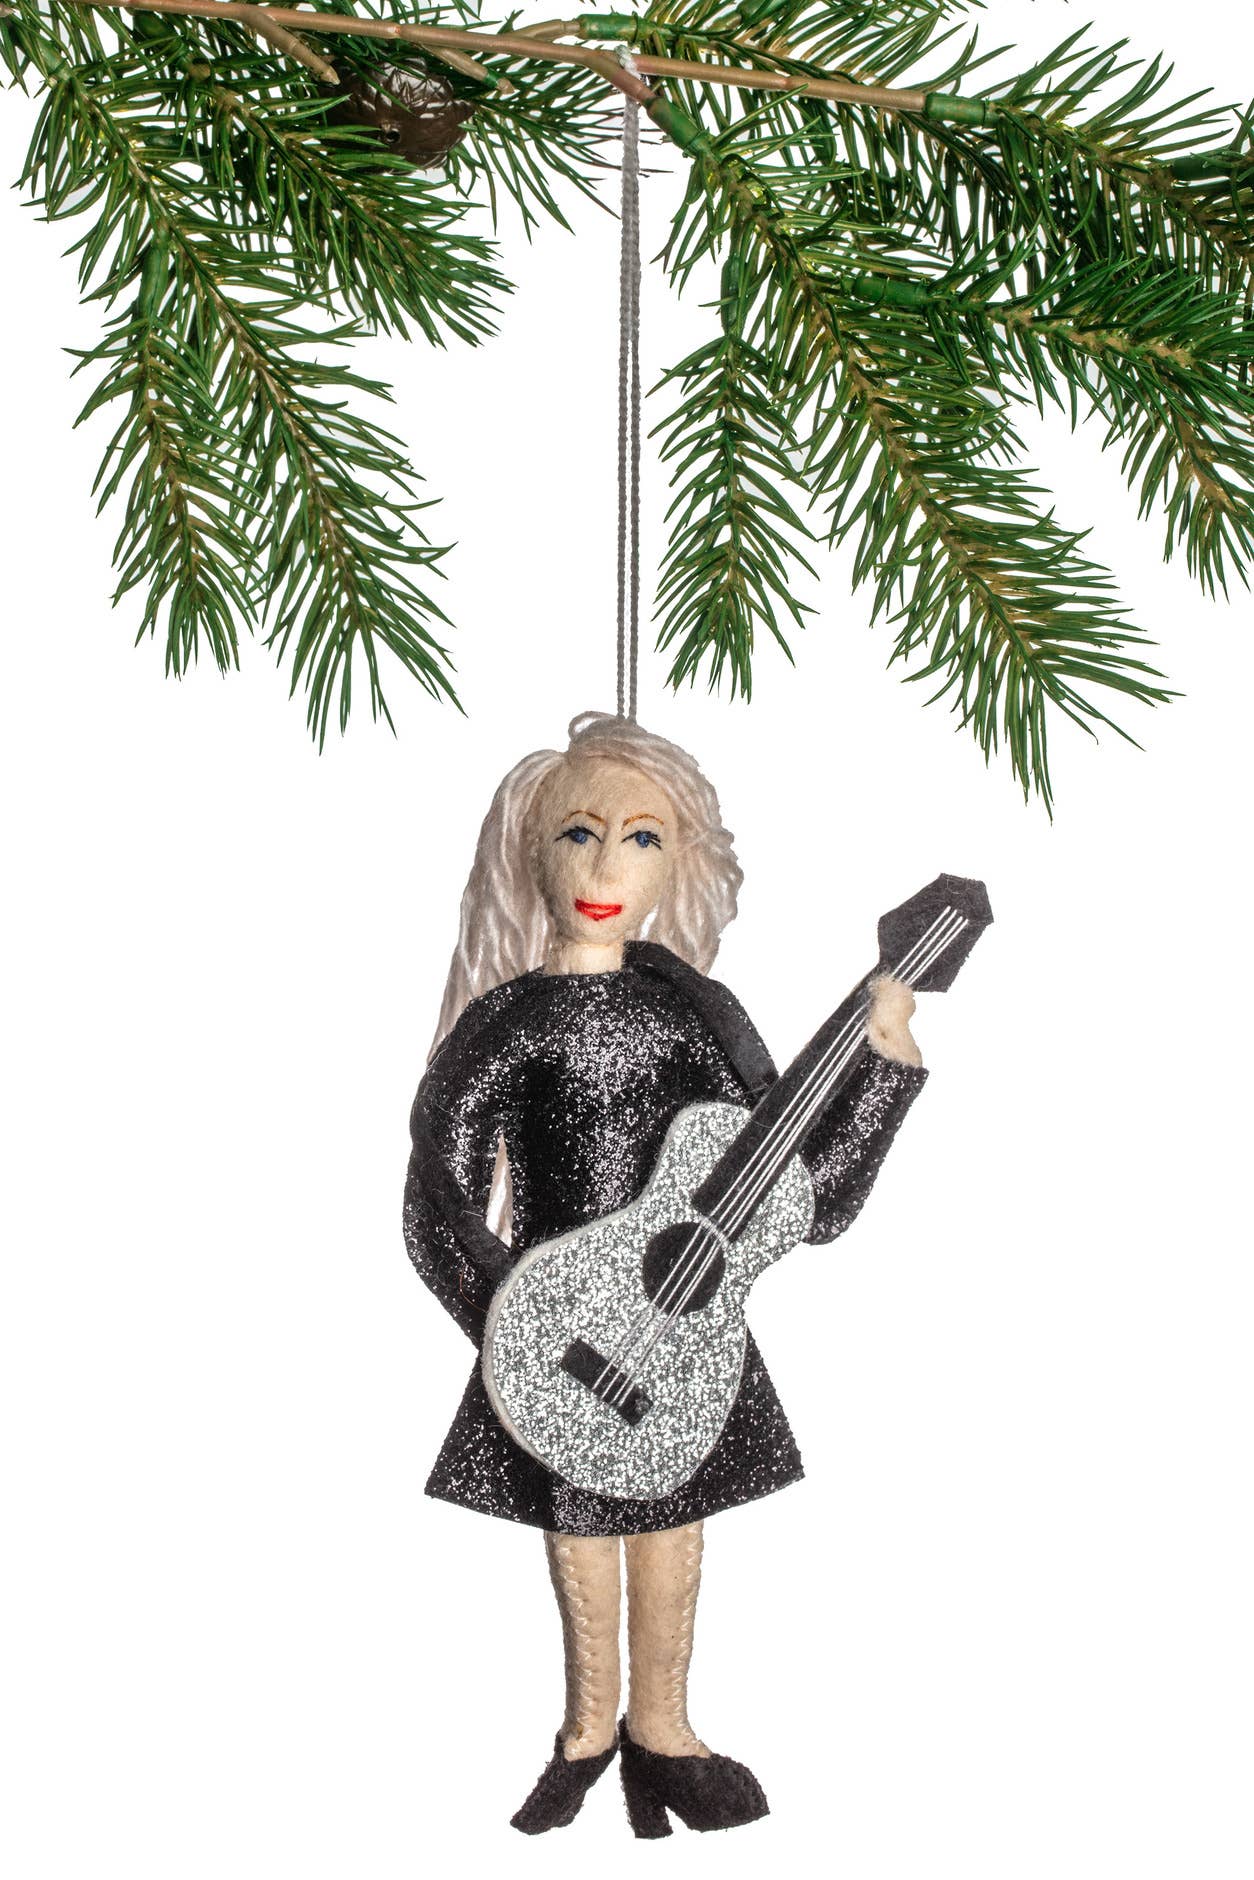 Taylor Swift Illustration Ornaments – MadeBetterbyBacon